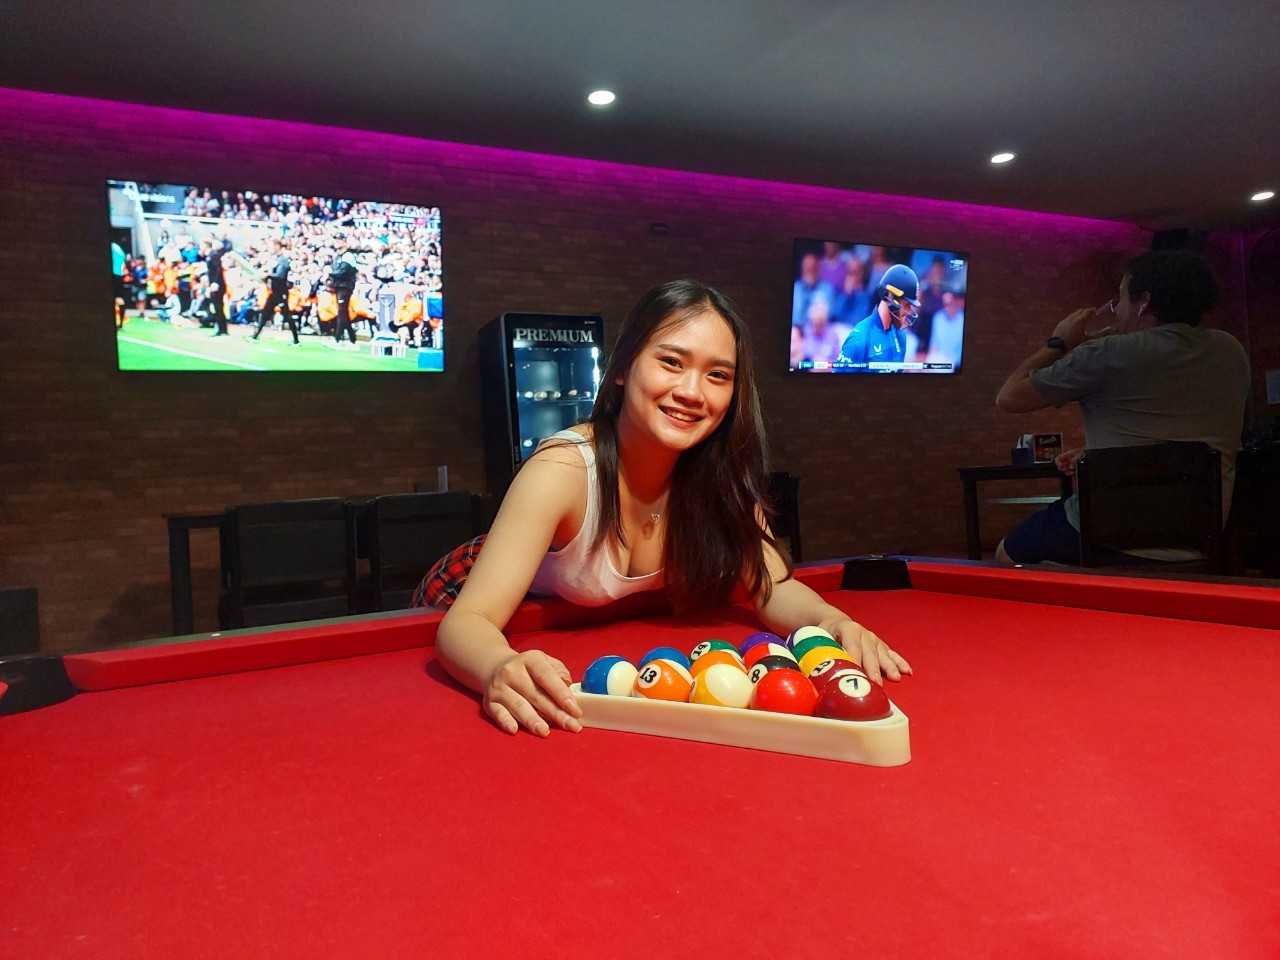 Bar girls work in Thailand's entertainment industry